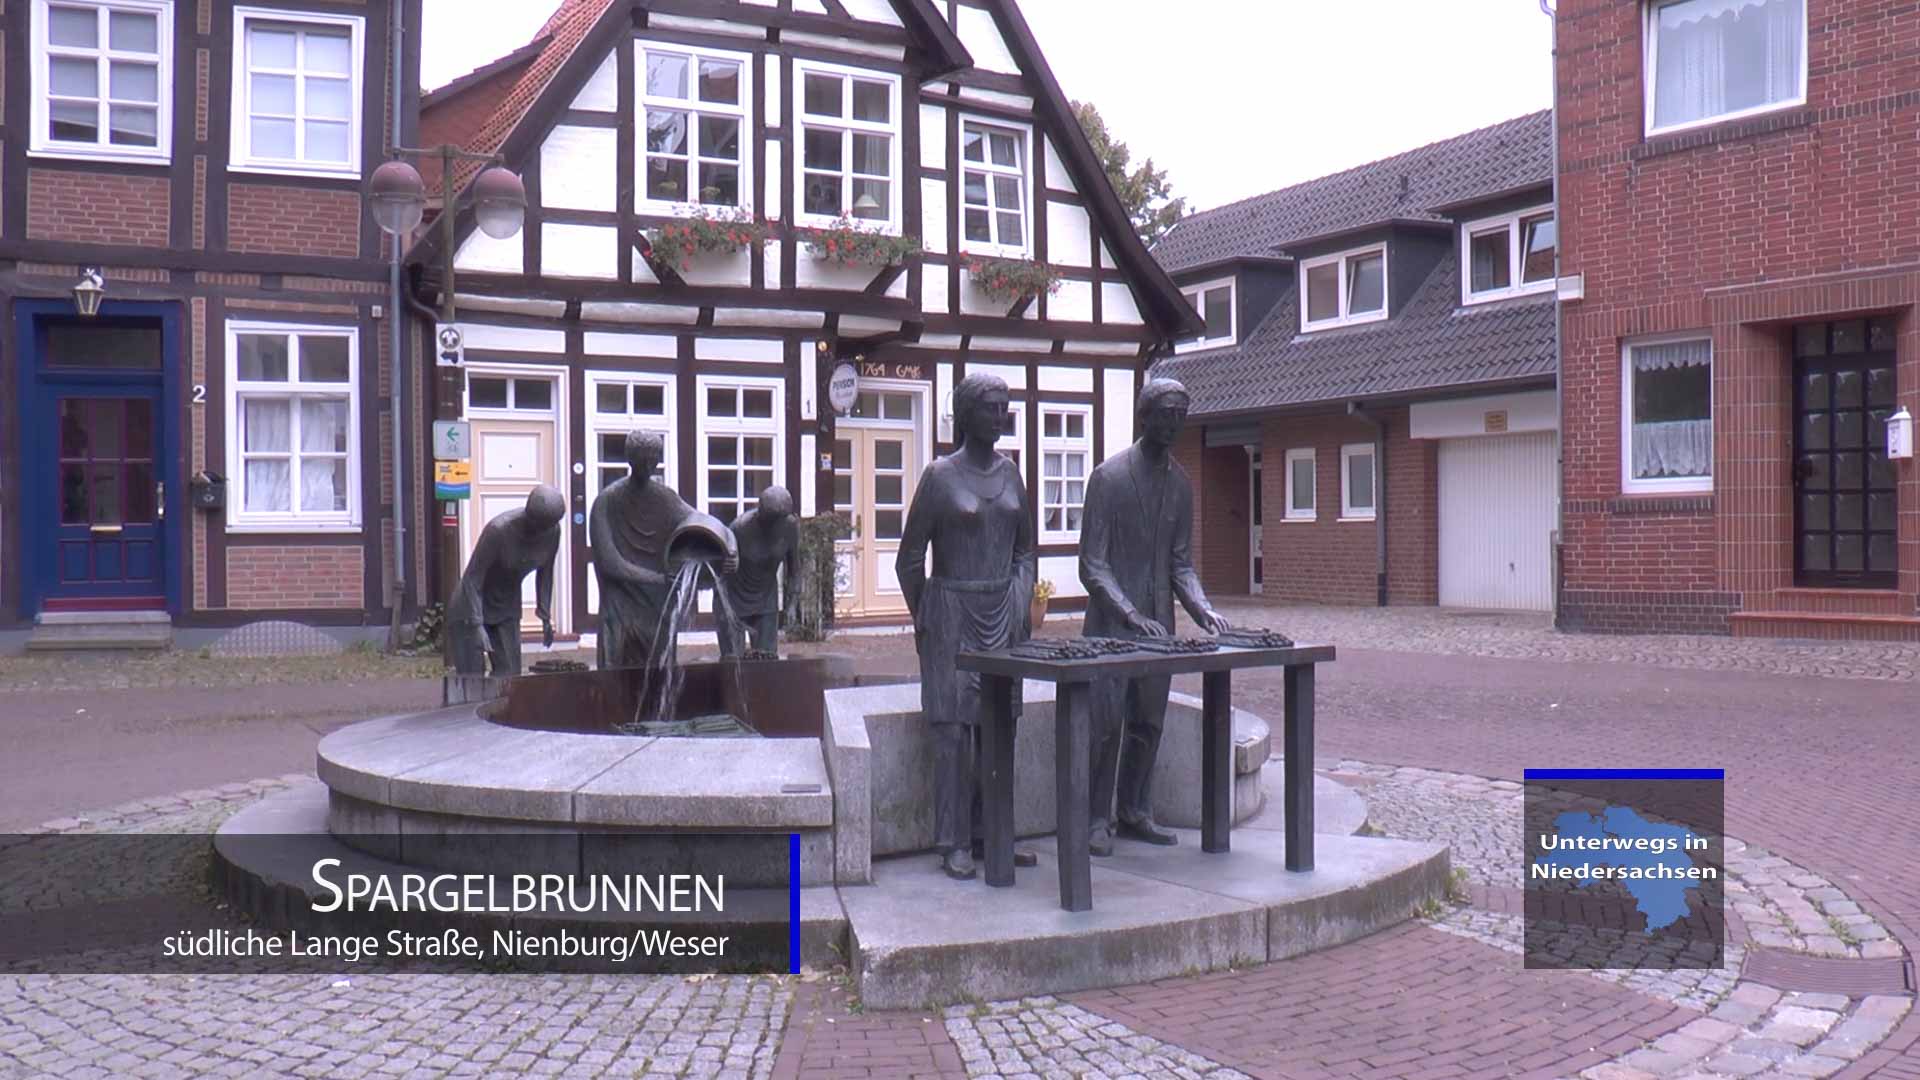 Nienburger Spargel